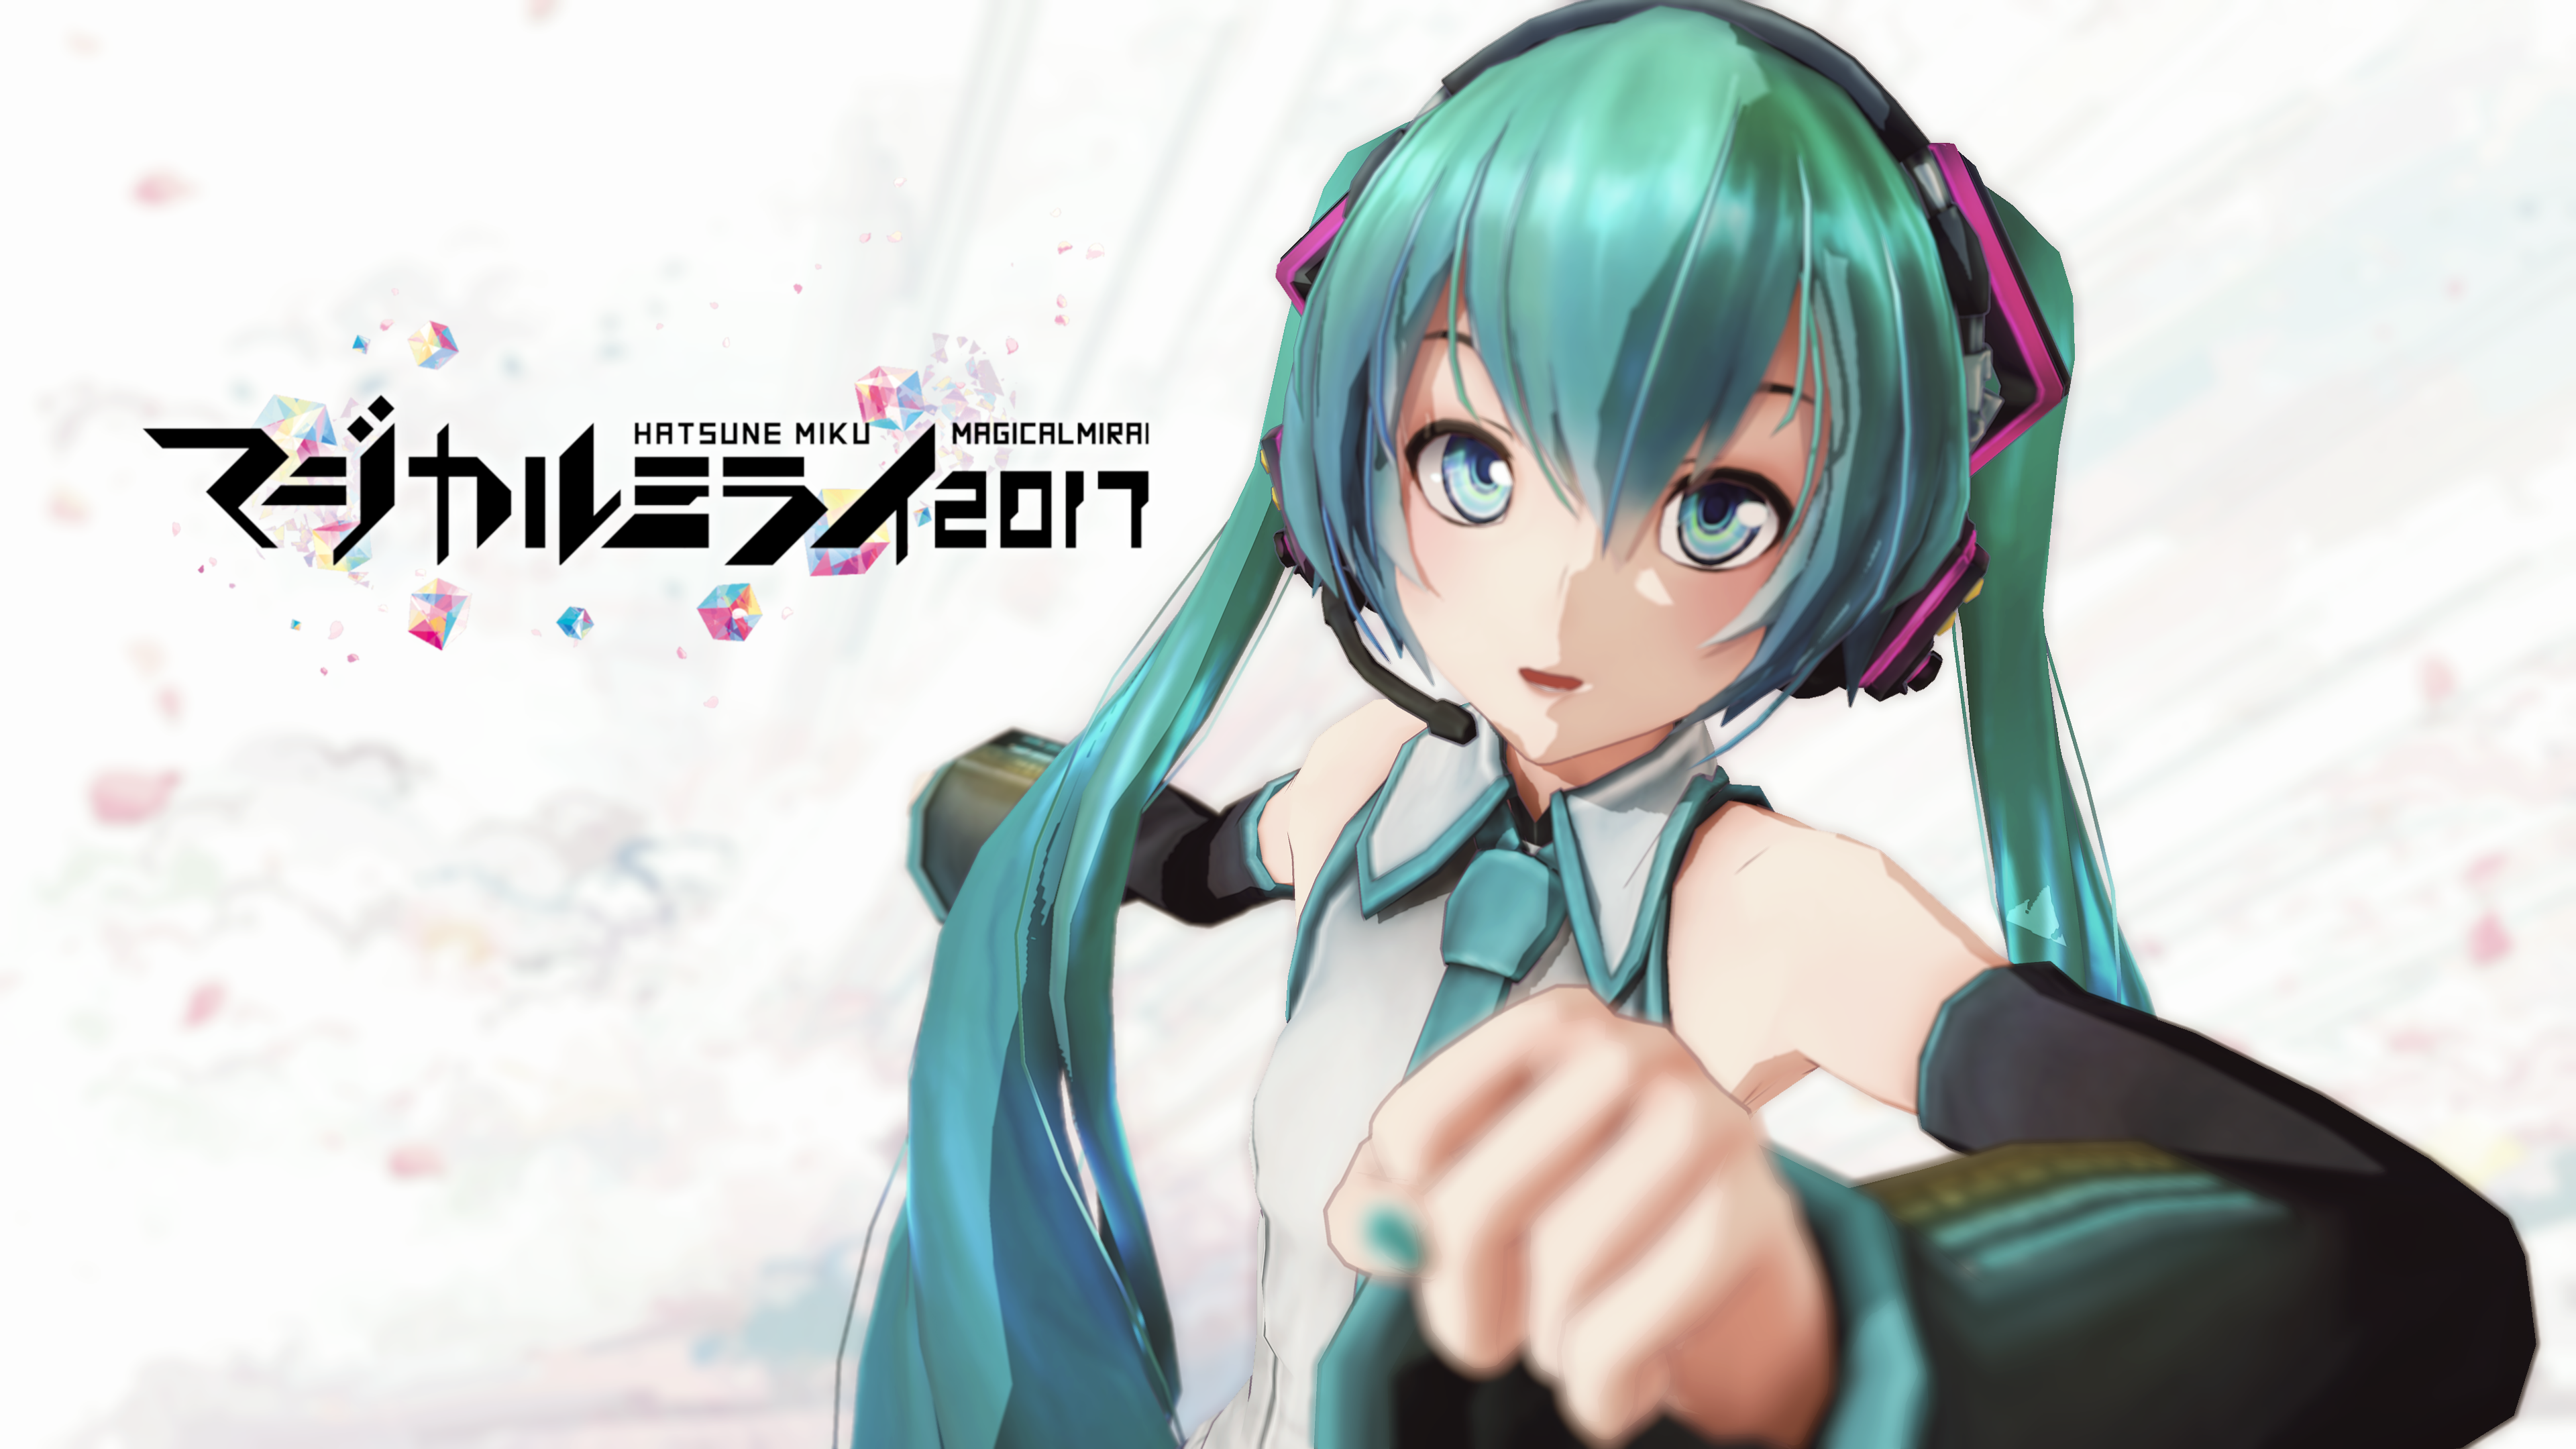 Anime Vocaloid 4k Ultra HD Wallpaper by Shaya